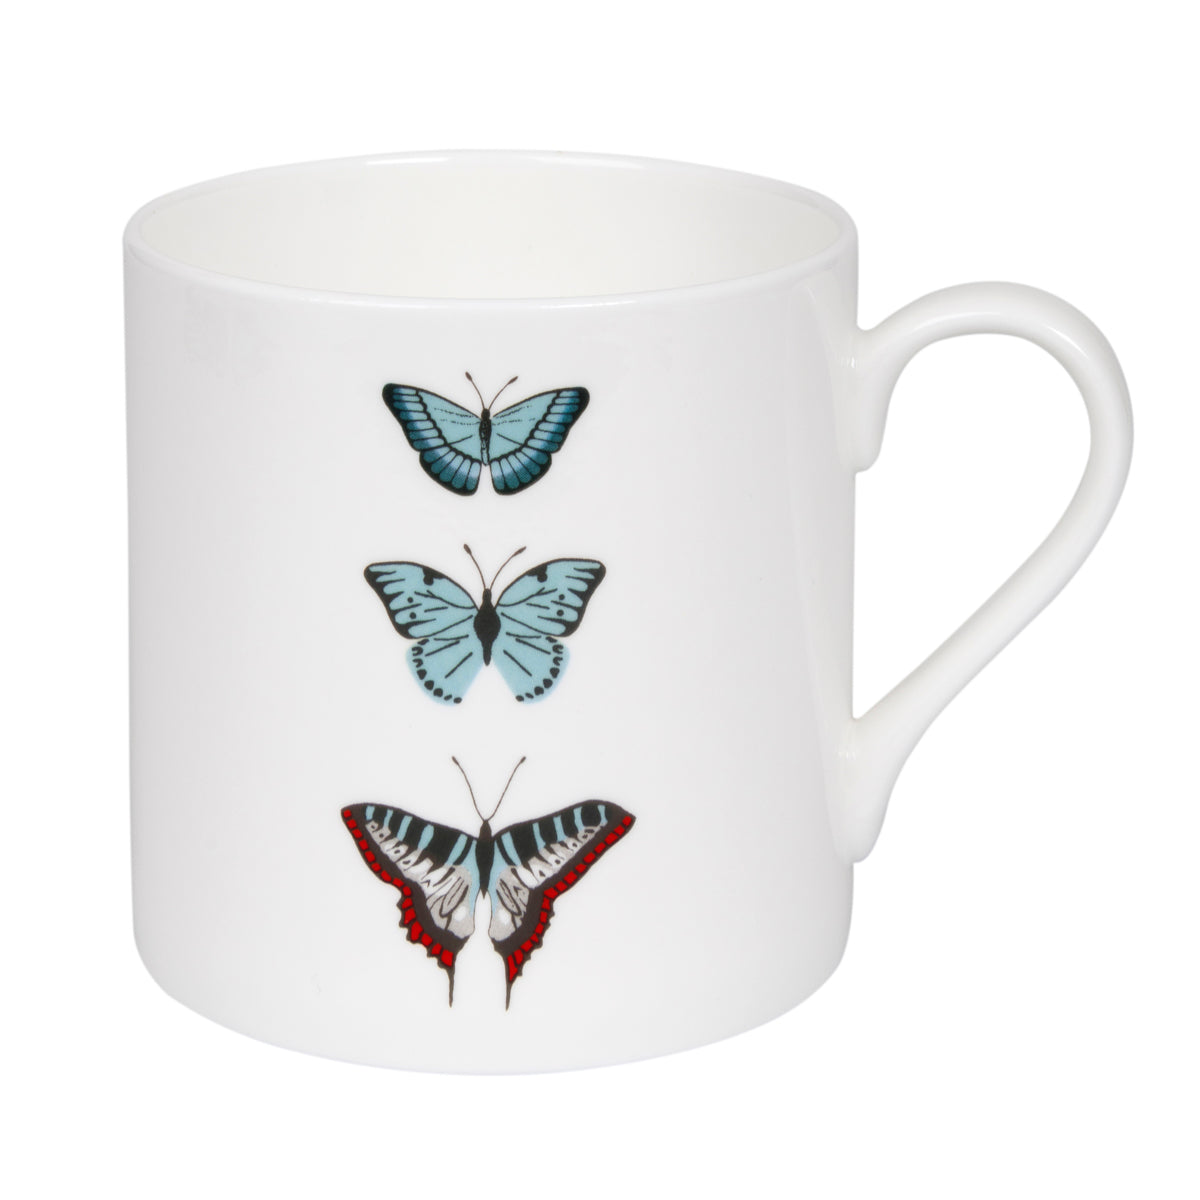 Sophie Allport fine bone china Butterflies Solo Mug feature three butterflies